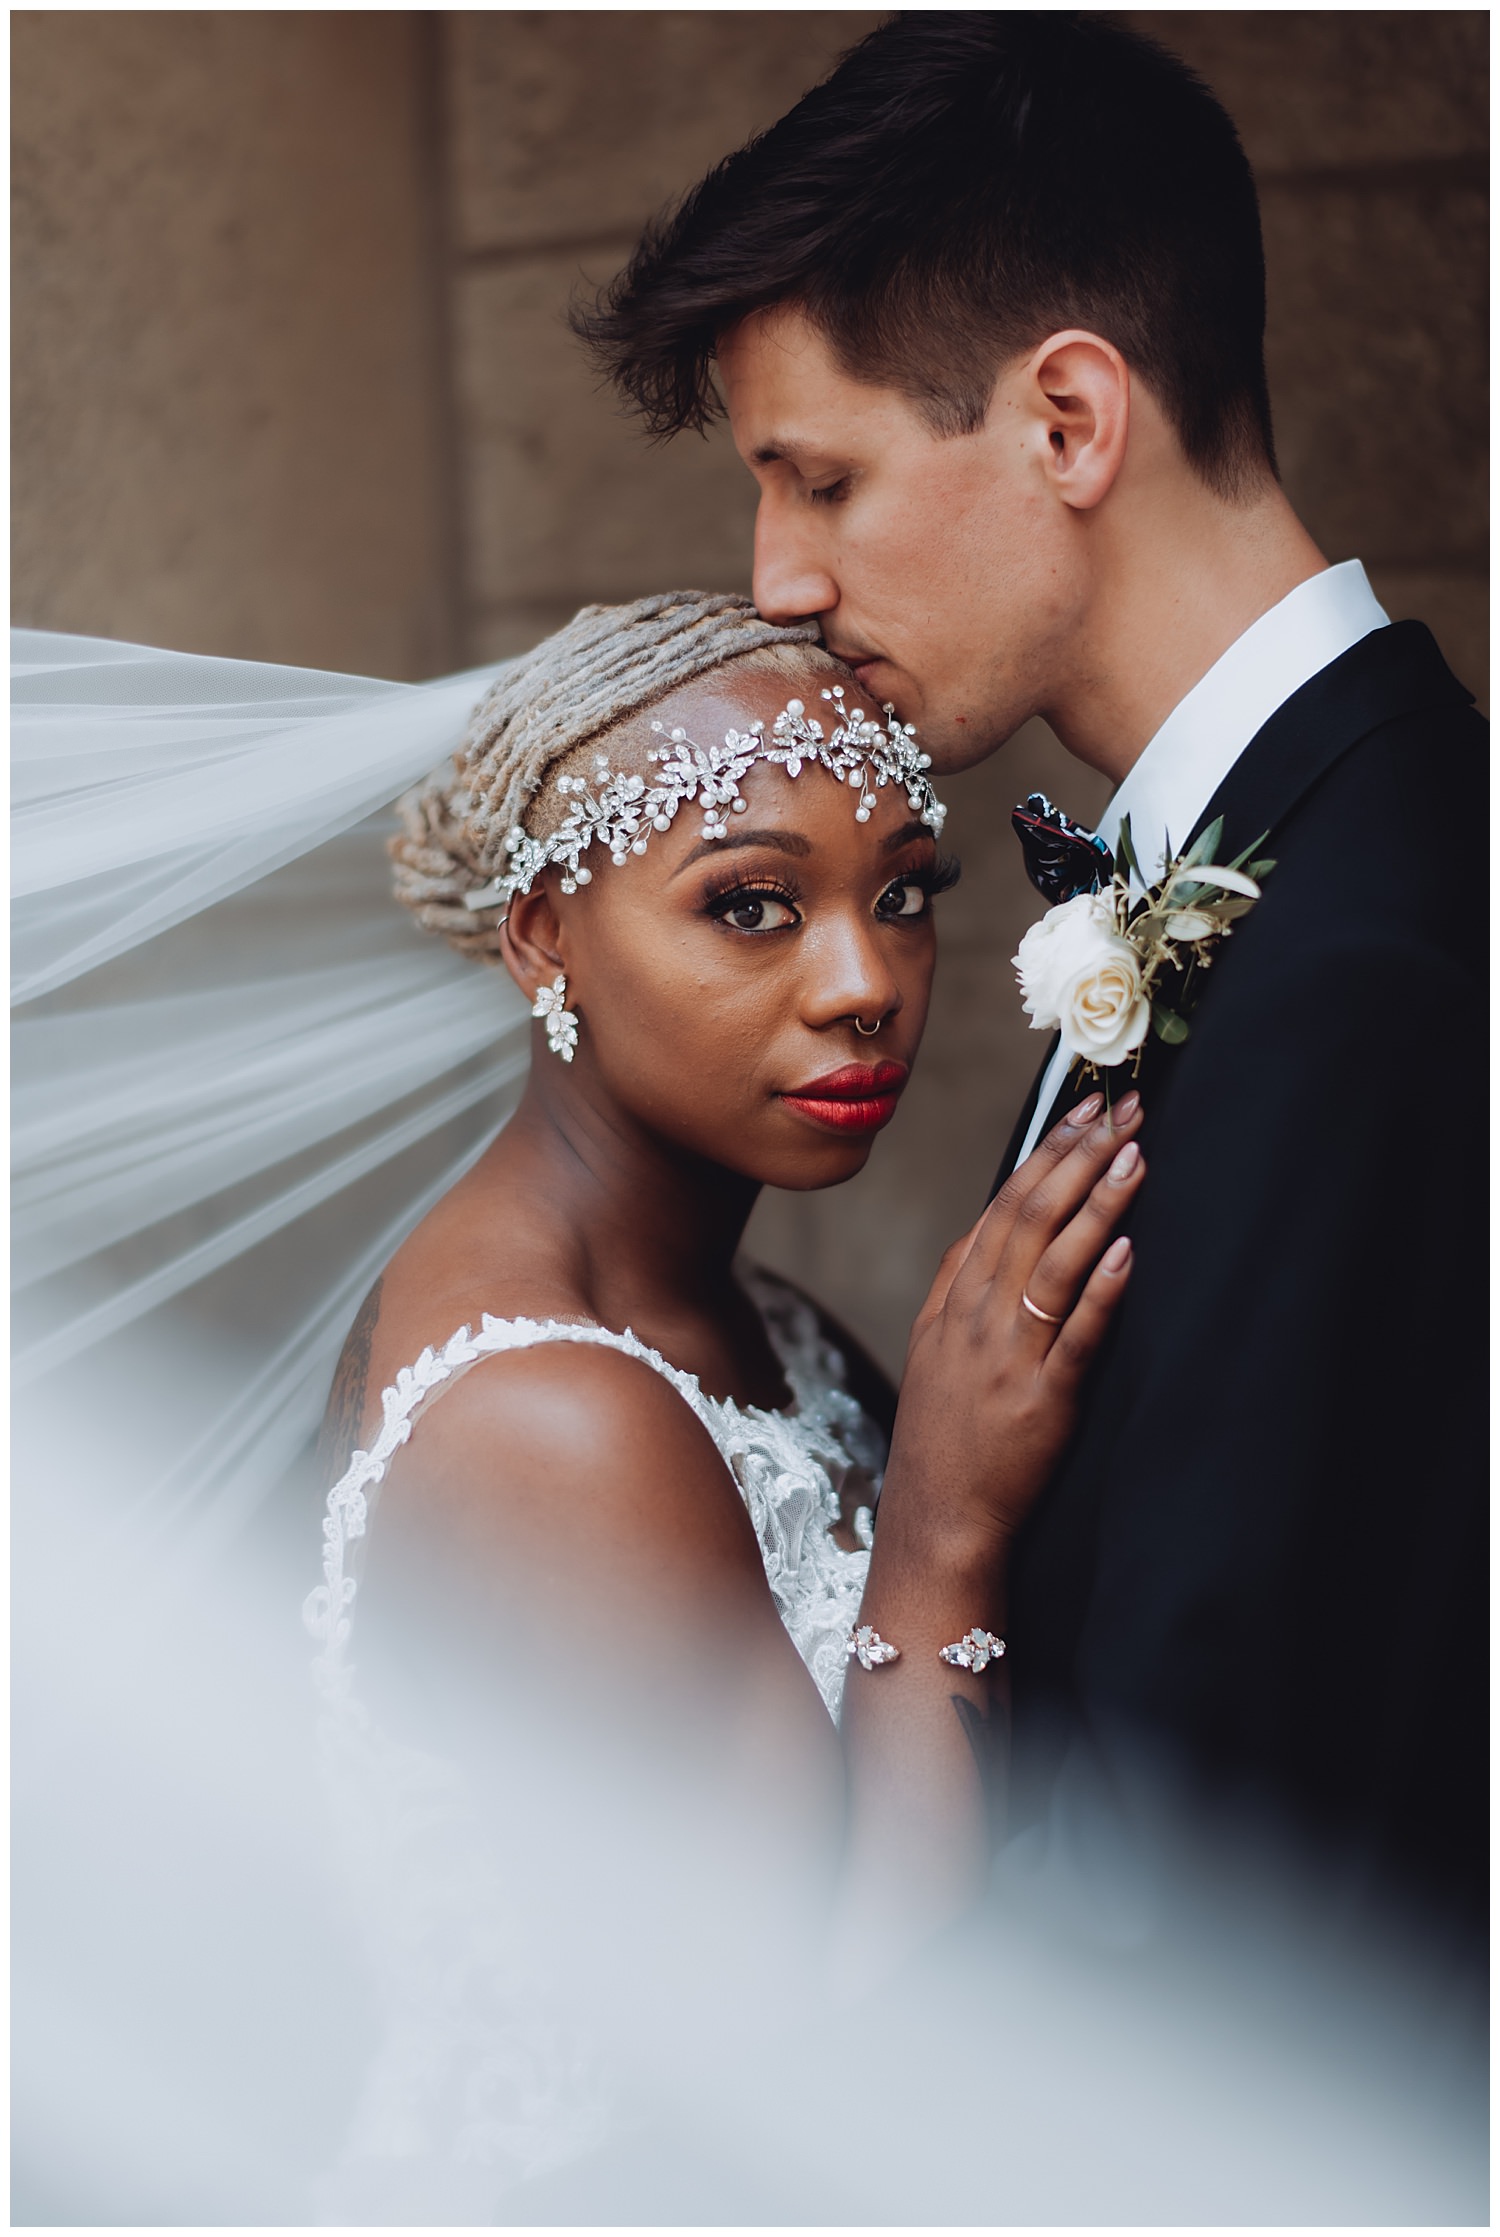 Keith House Chicago Wedding, The Adamkovi, romantic veil photo of the bride and groom, interracial couple